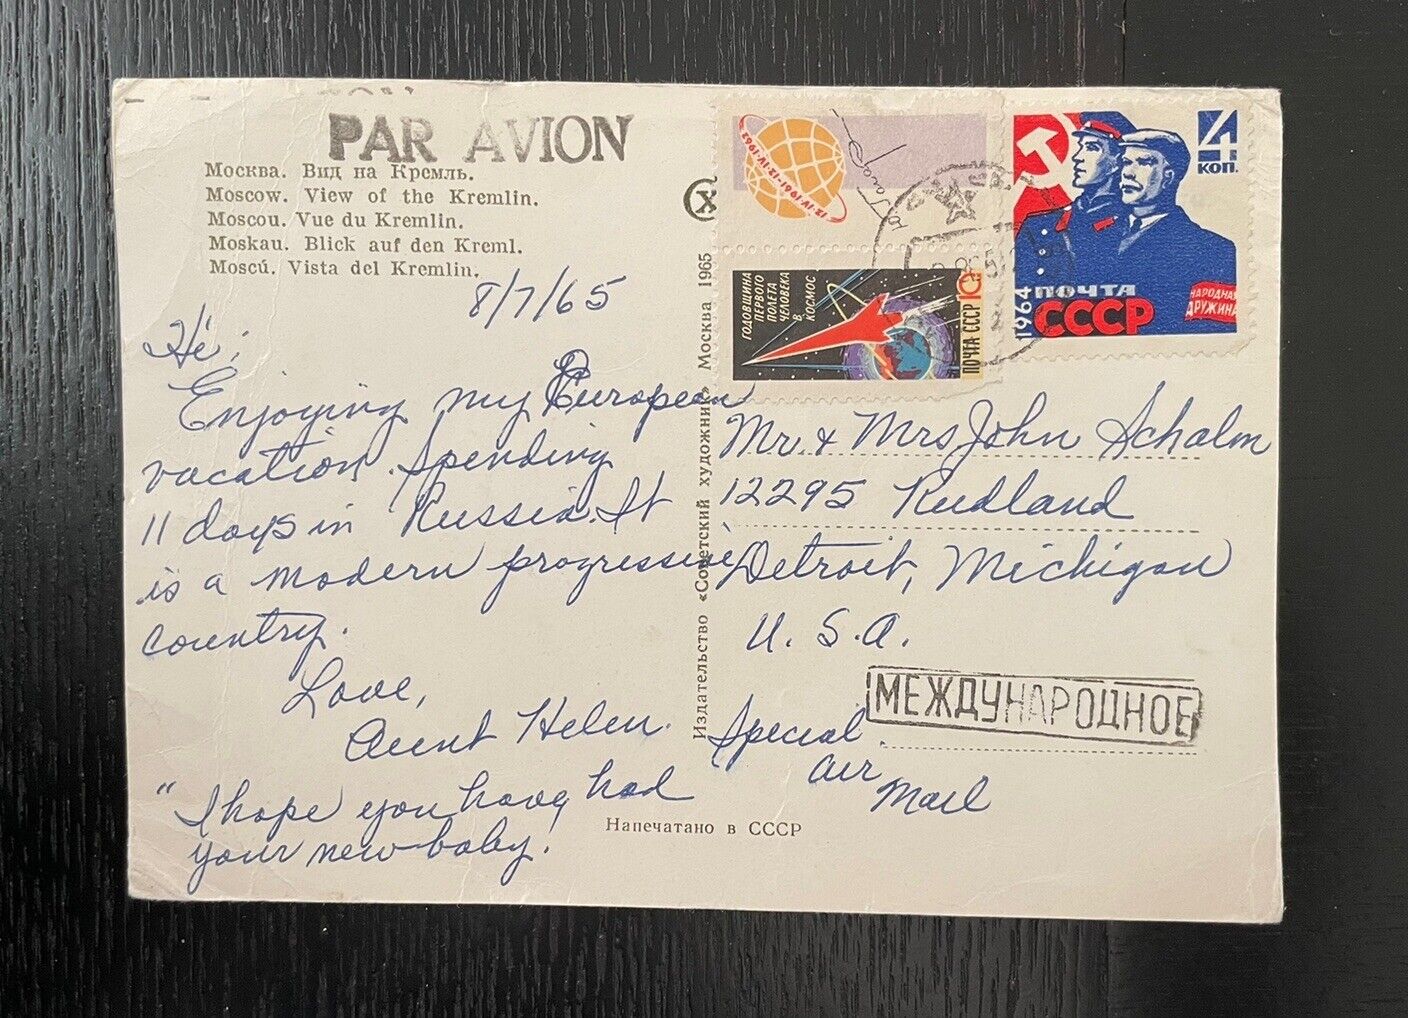 Ultra Rare Vintage 1965 Postcard From Soviet Russia To Detroit MI USA, Amazing